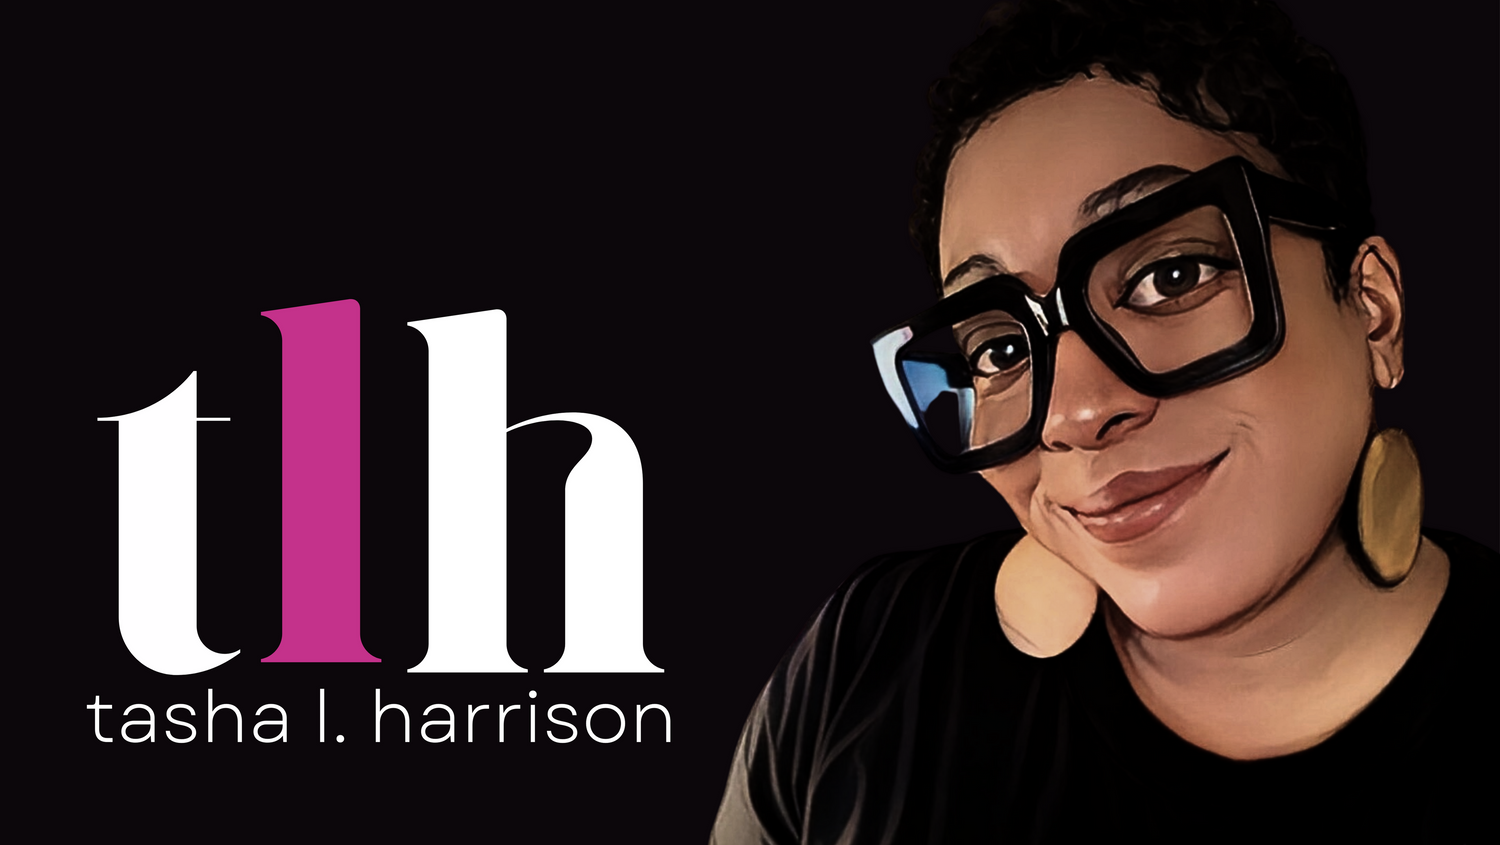 tasha l. harrison, author of black and interracial romance that focuses on black women